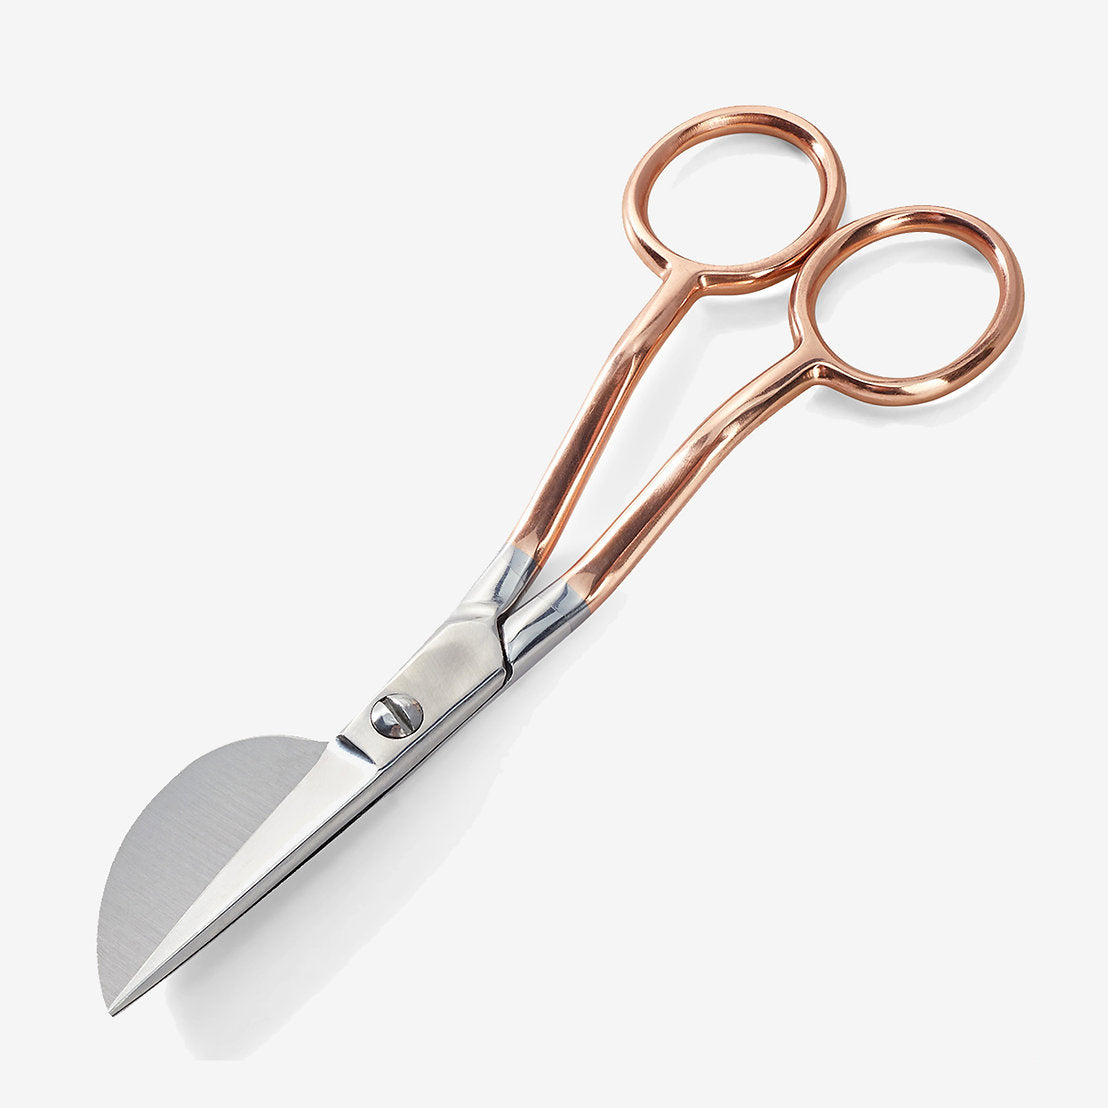 Prym Rose Gold 15cm Precision Application Scissors